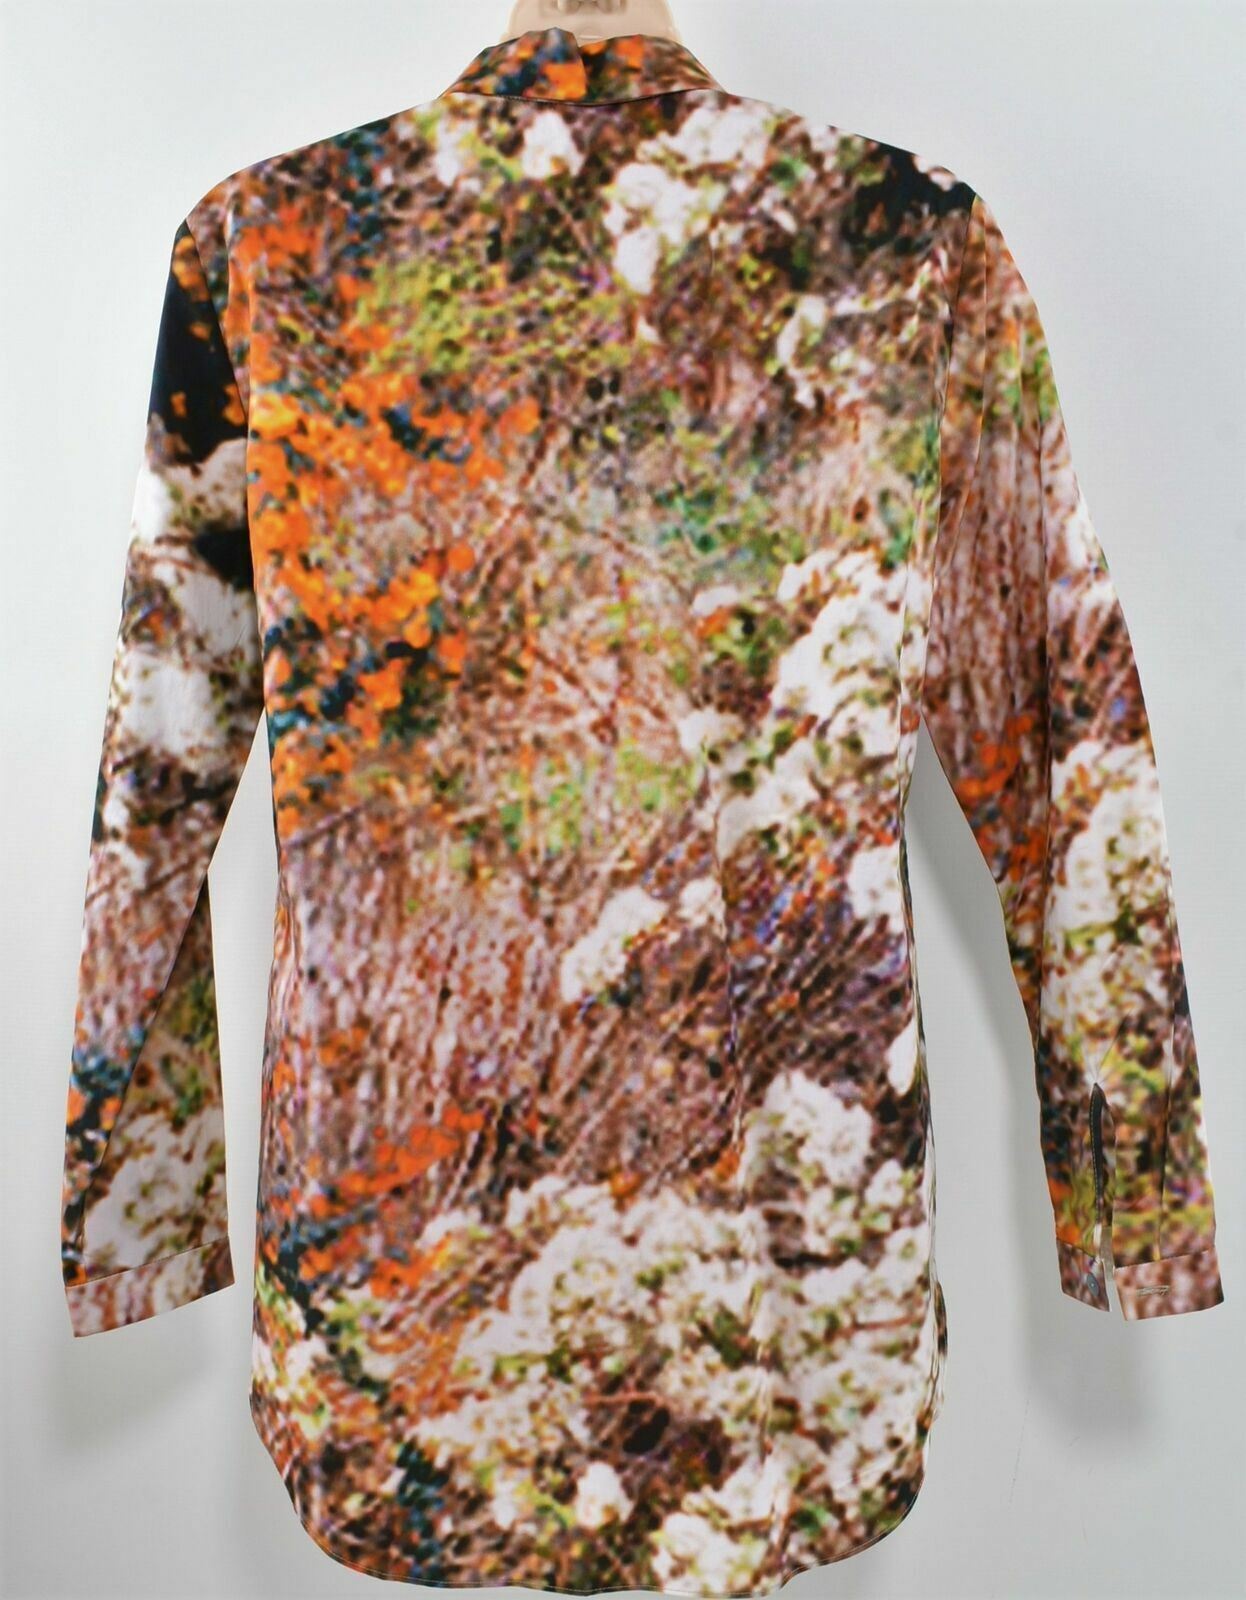 CARVEN Women's Multicoloured Graphic Print Long Sleeve Shirt Size France 36 UK 8